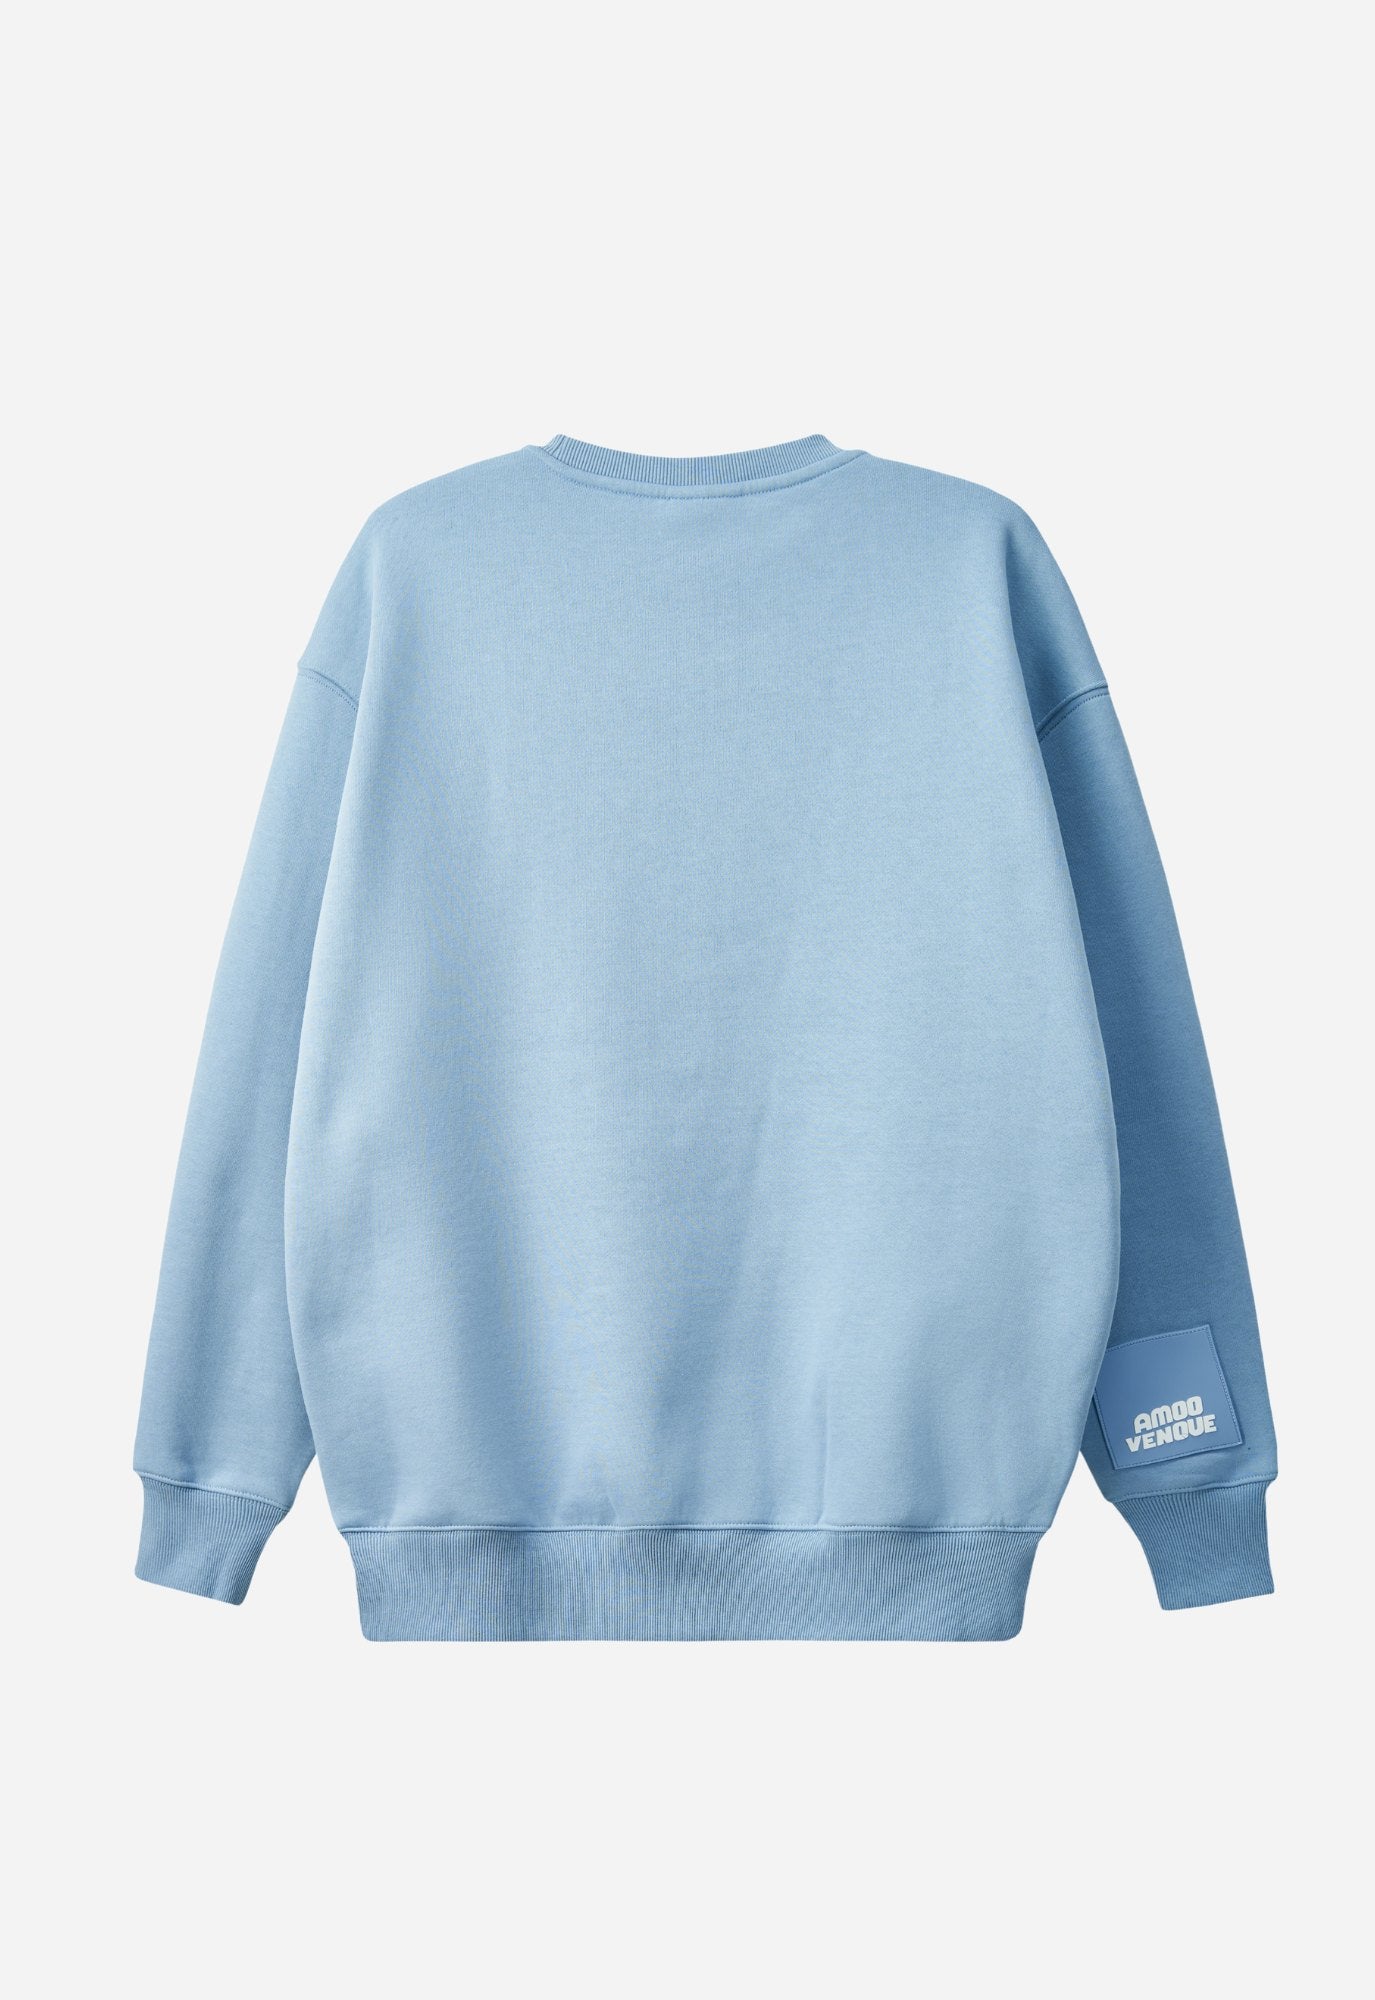 Pixel Fog Blue Sweatshirt